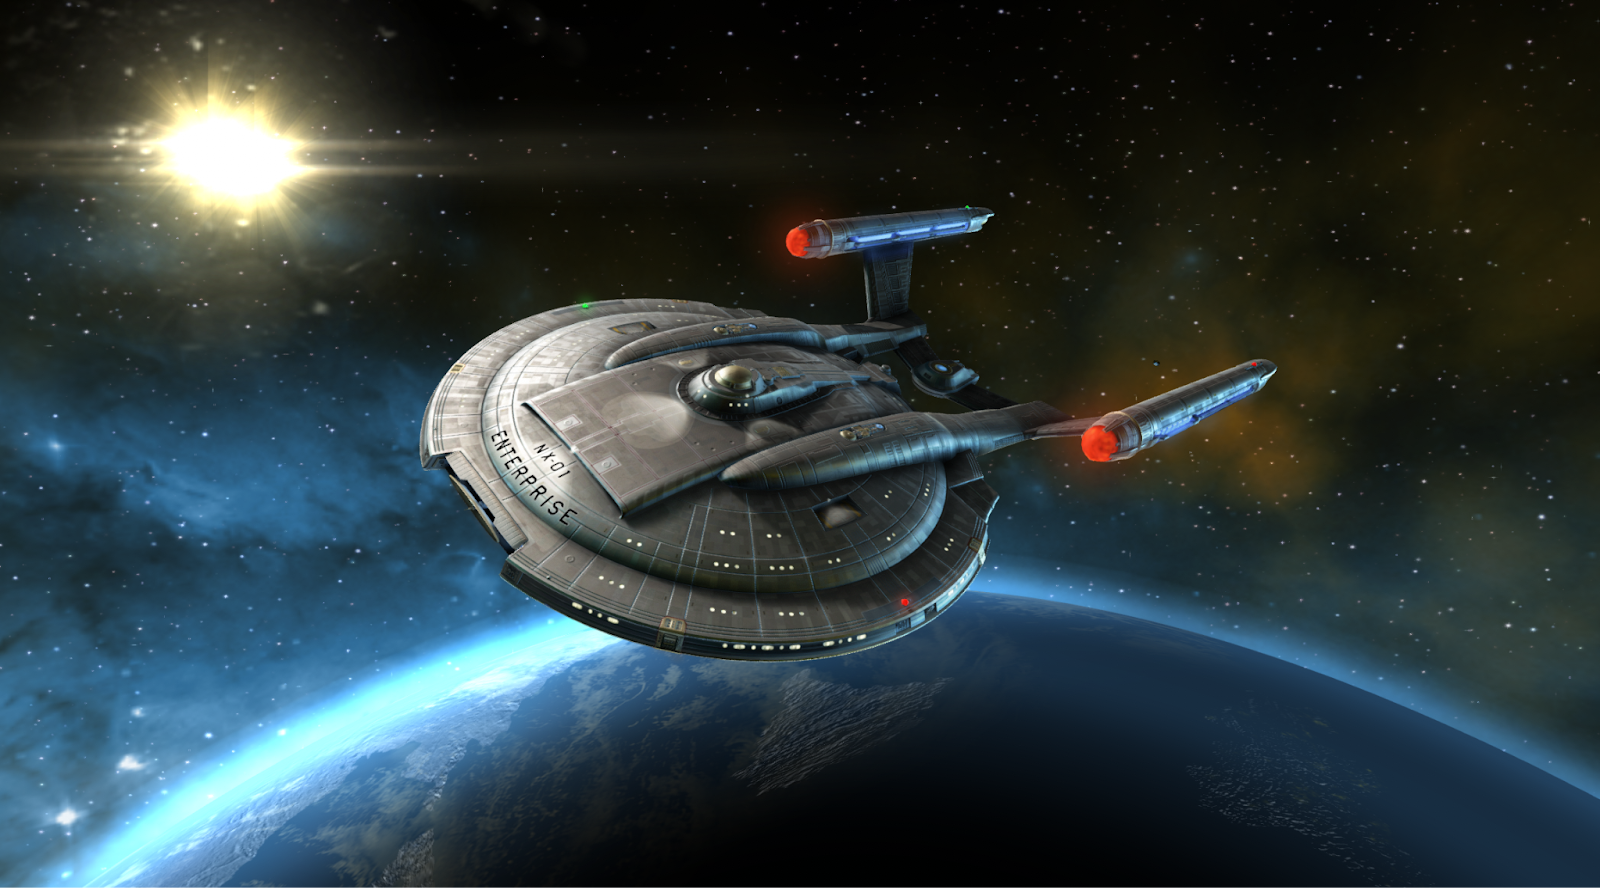 star trek fleet command enterprise blueprints cost